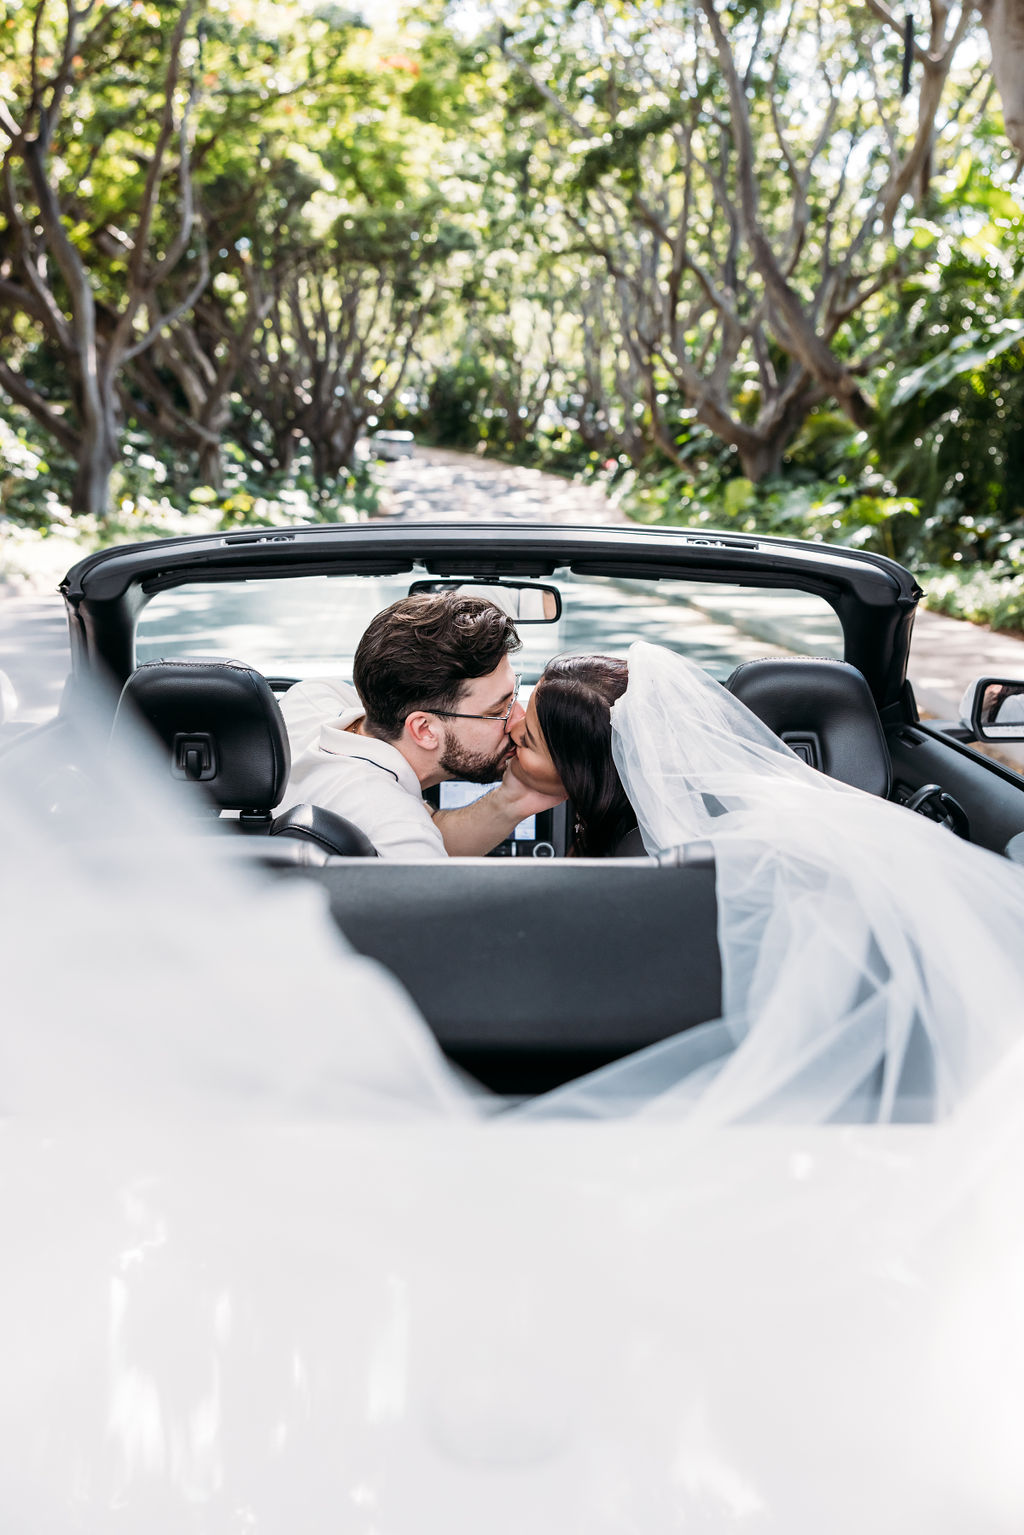 Real-wedding-helena-david-hawaii-pre-ceremony-portrait-bride-and-groom-kiss-car-convertible-transport